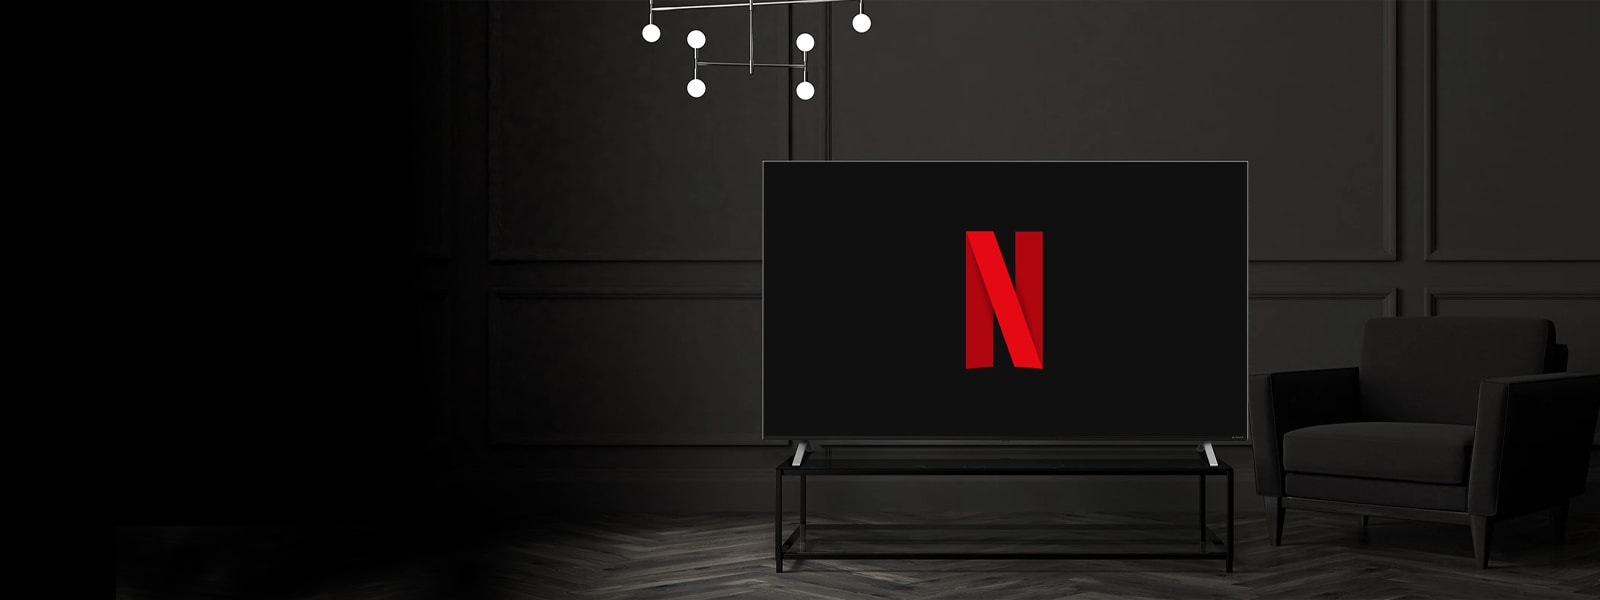 LG Pro:Centric SMART with Netflix